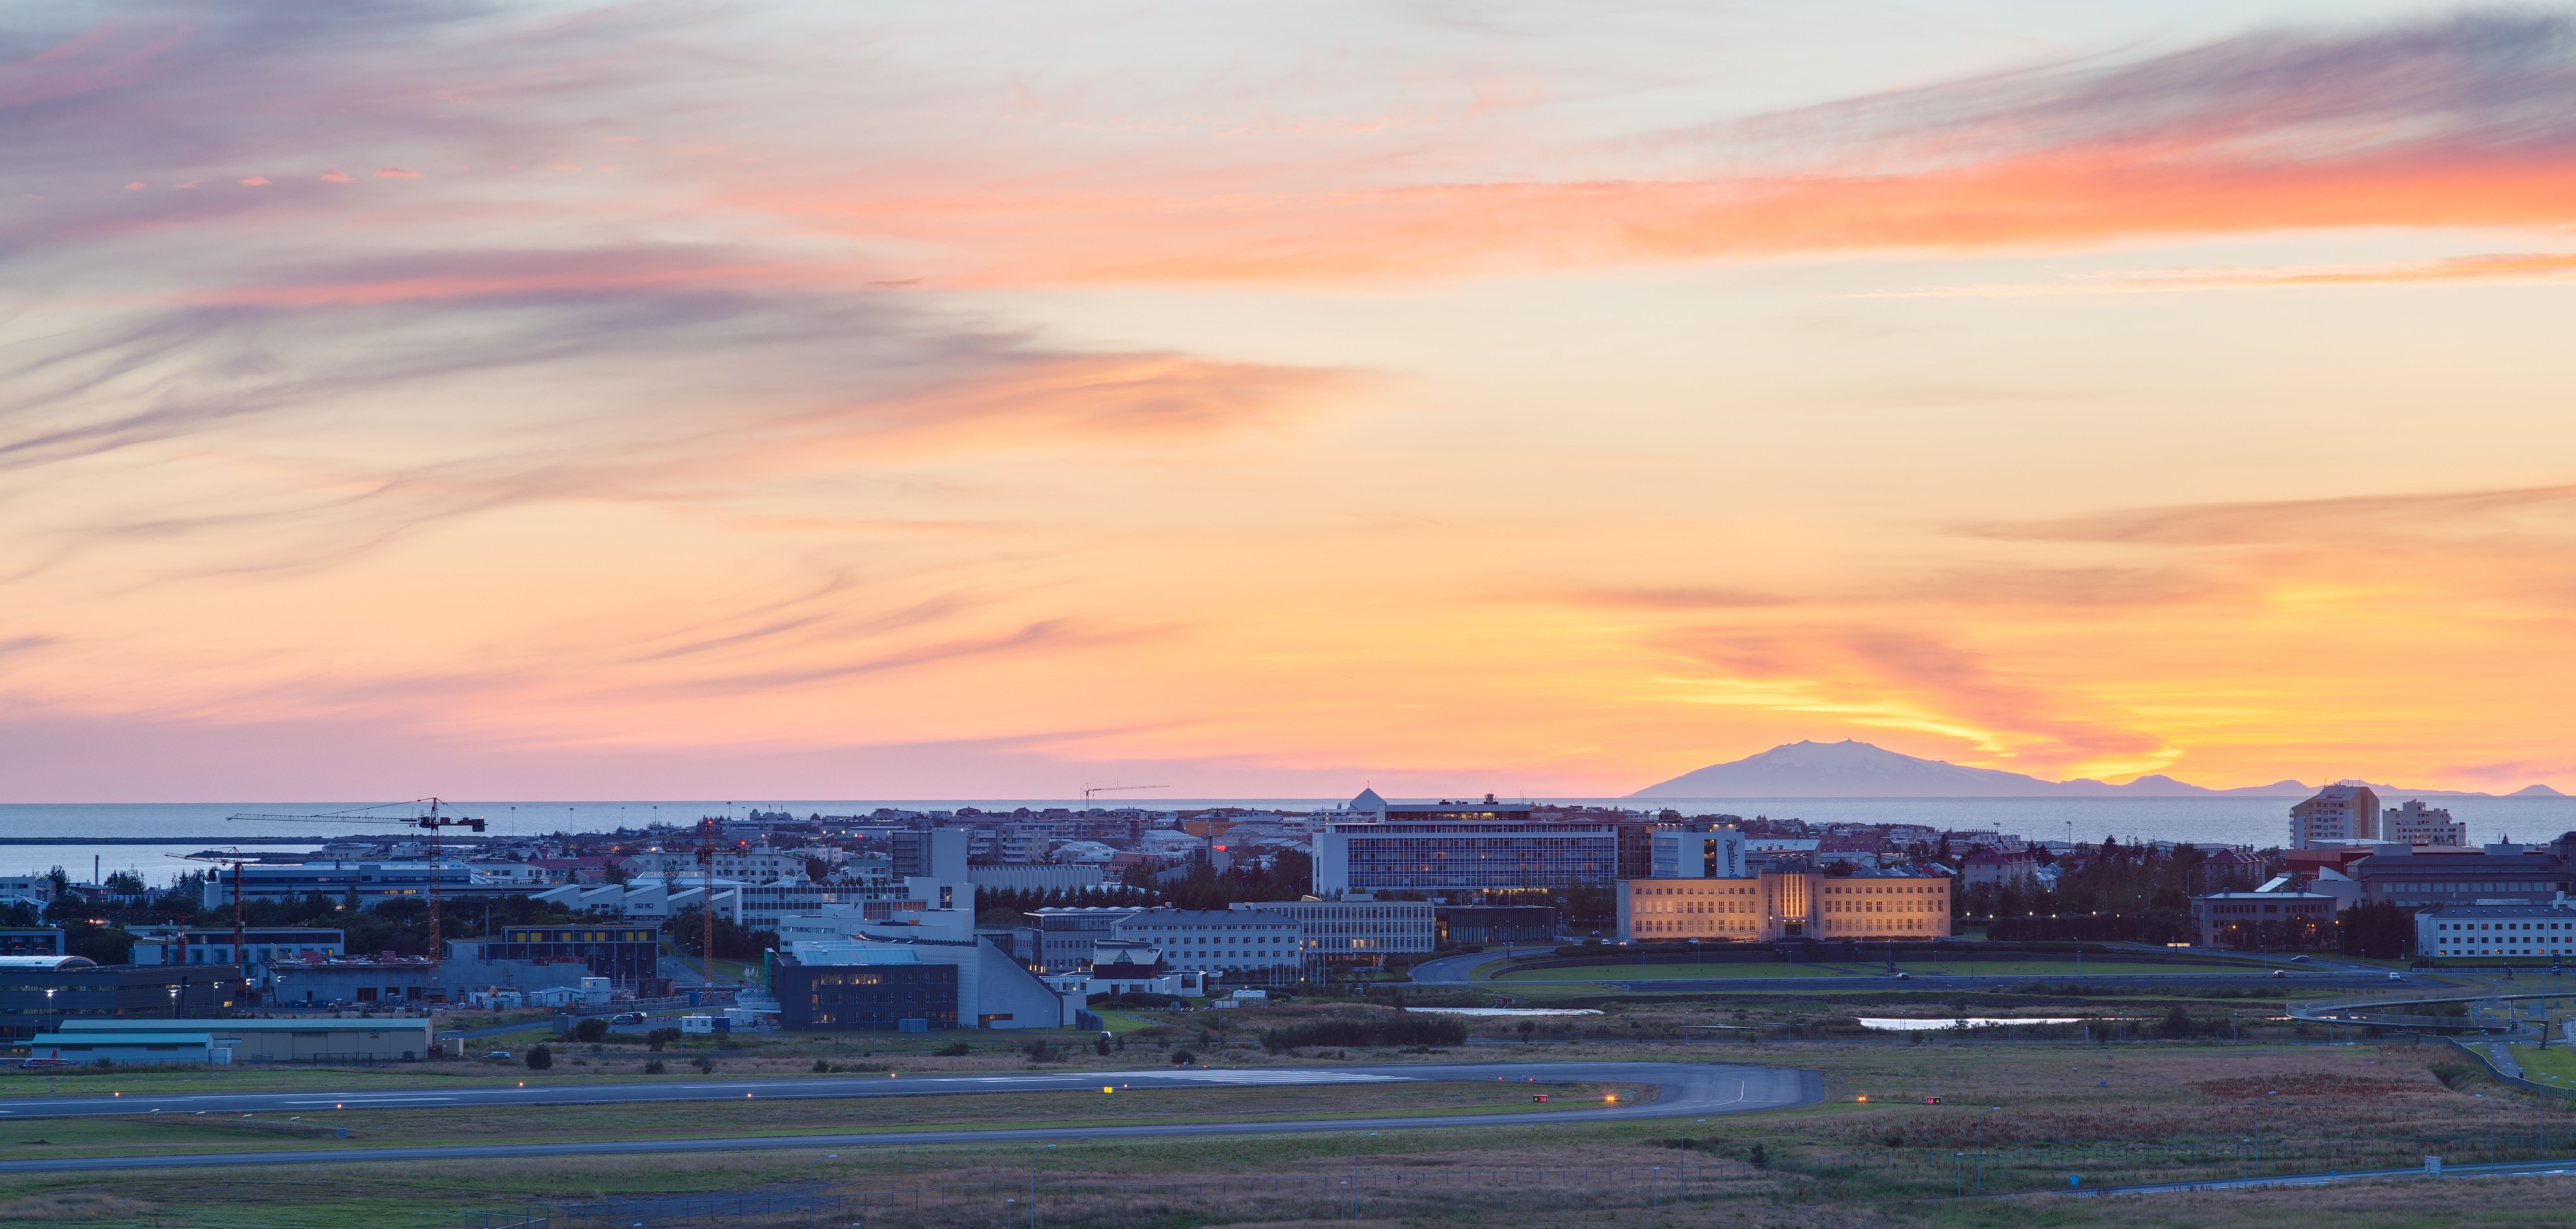 Vista de Reikiavik desde Perlan, Distrito de la Capital, Islandia, 2014-08-13, DD 127-129 HDR